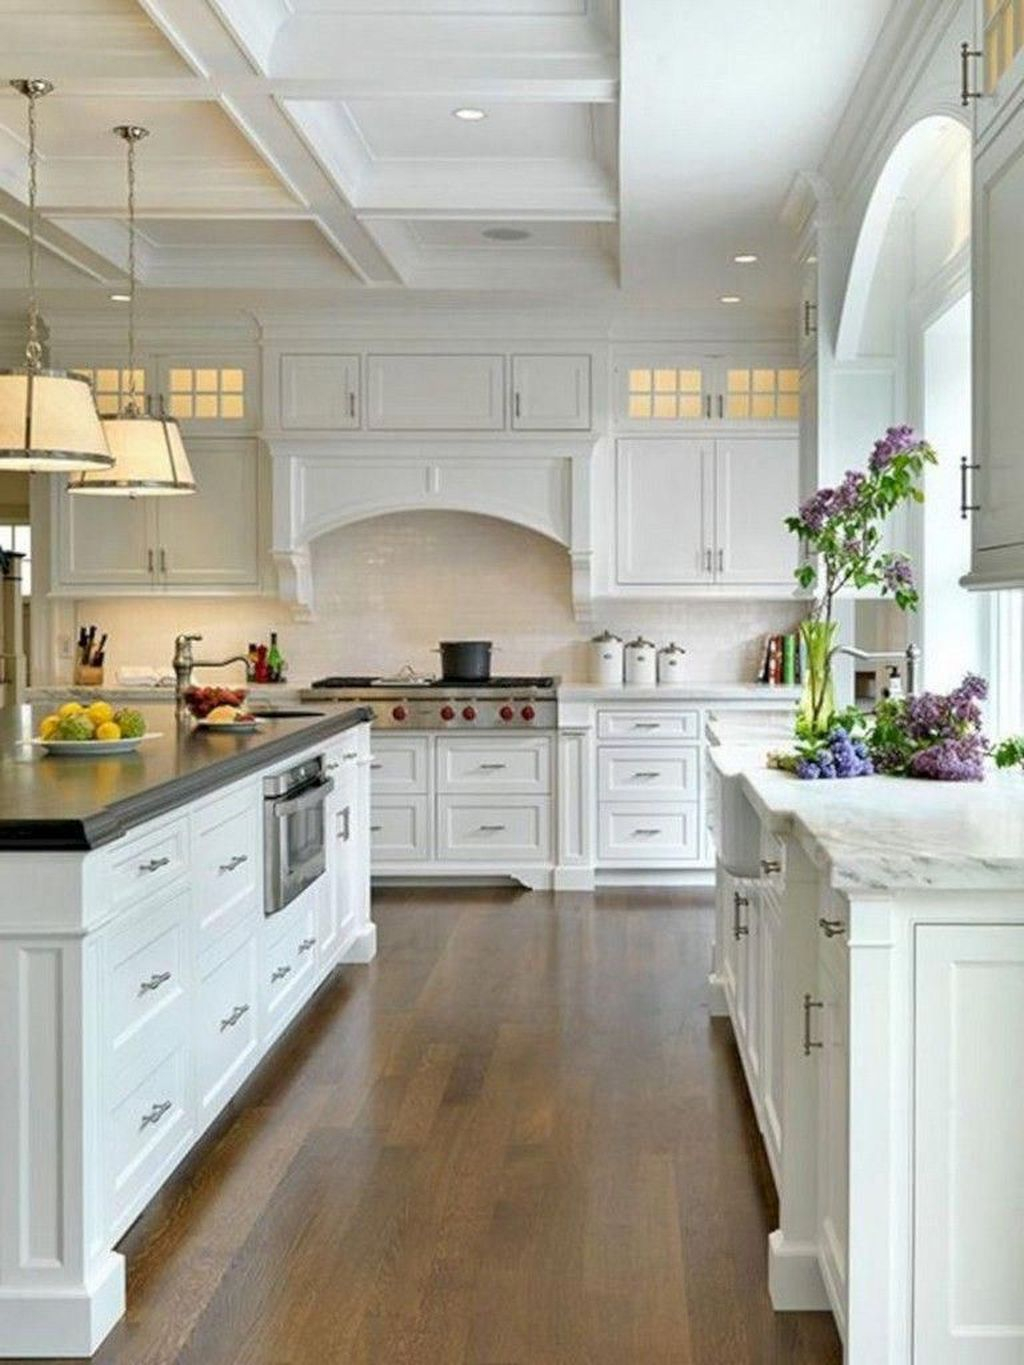 Charming Kitchen Cabinet Decorating Ideas15